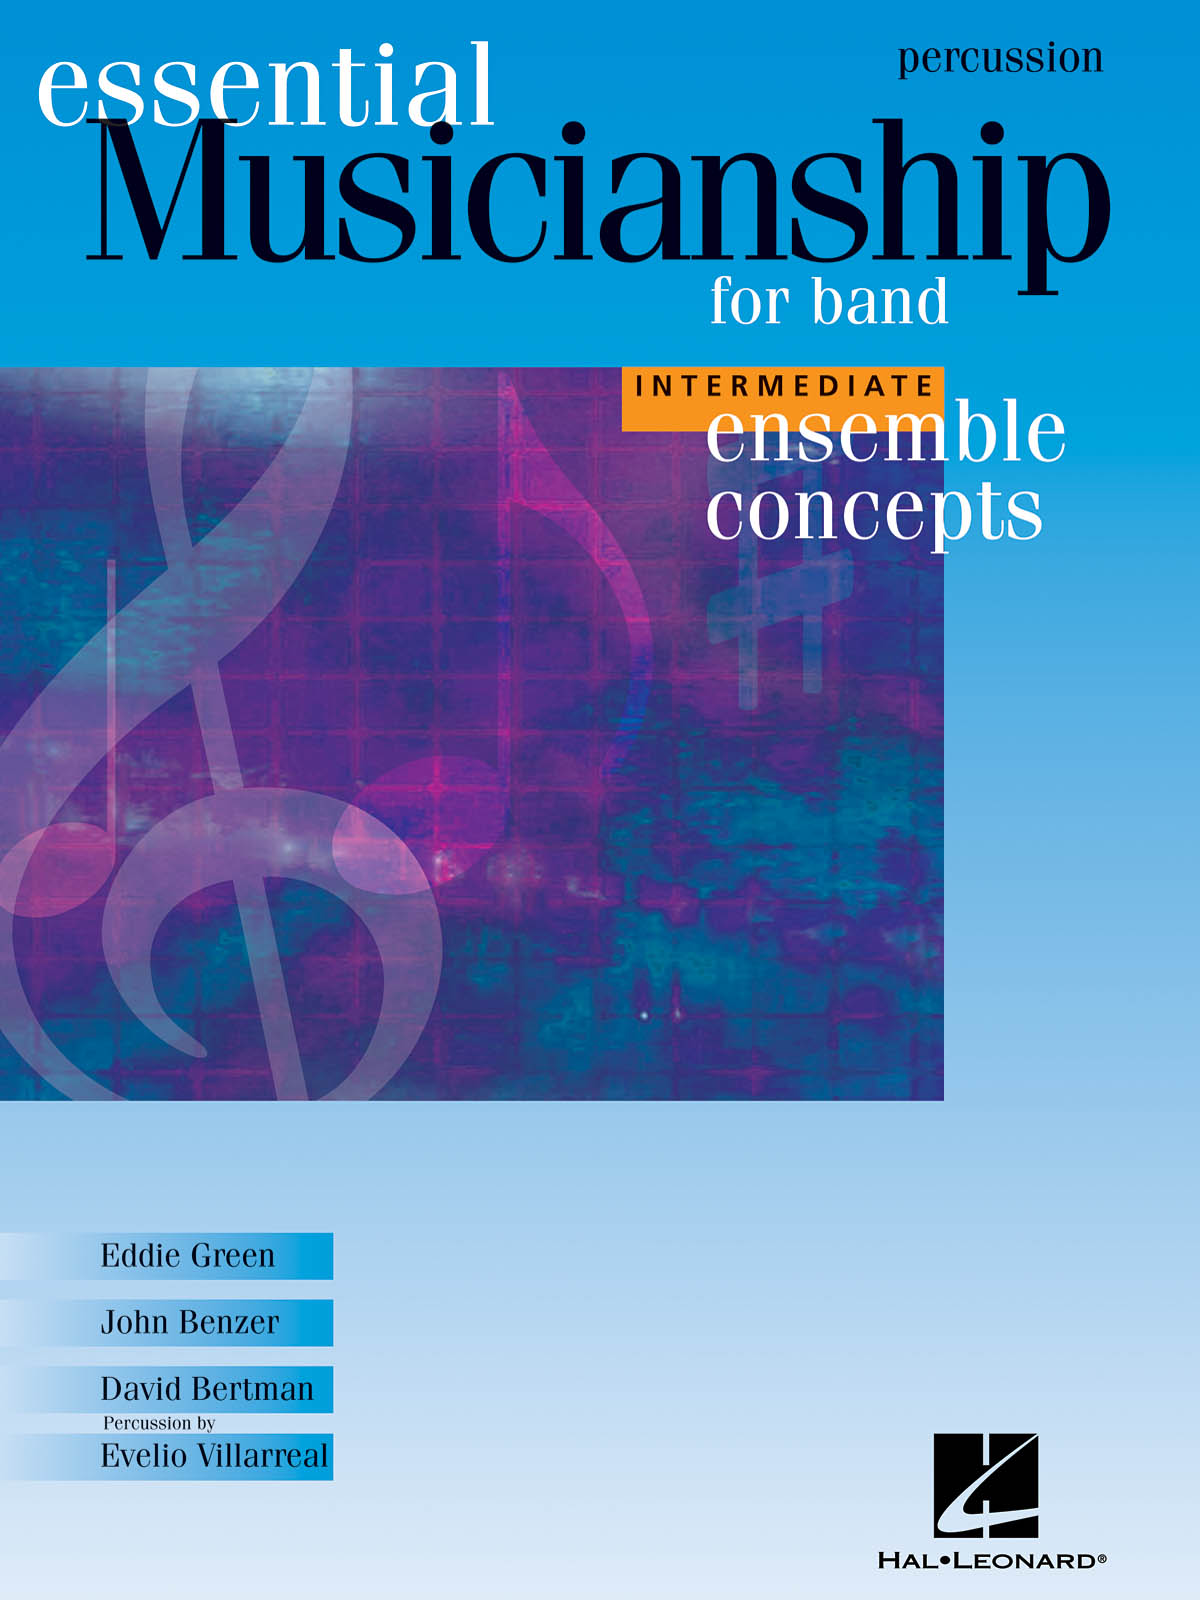 Ensemble Concepts for Band - Intermediate Level: Concert Band: Part